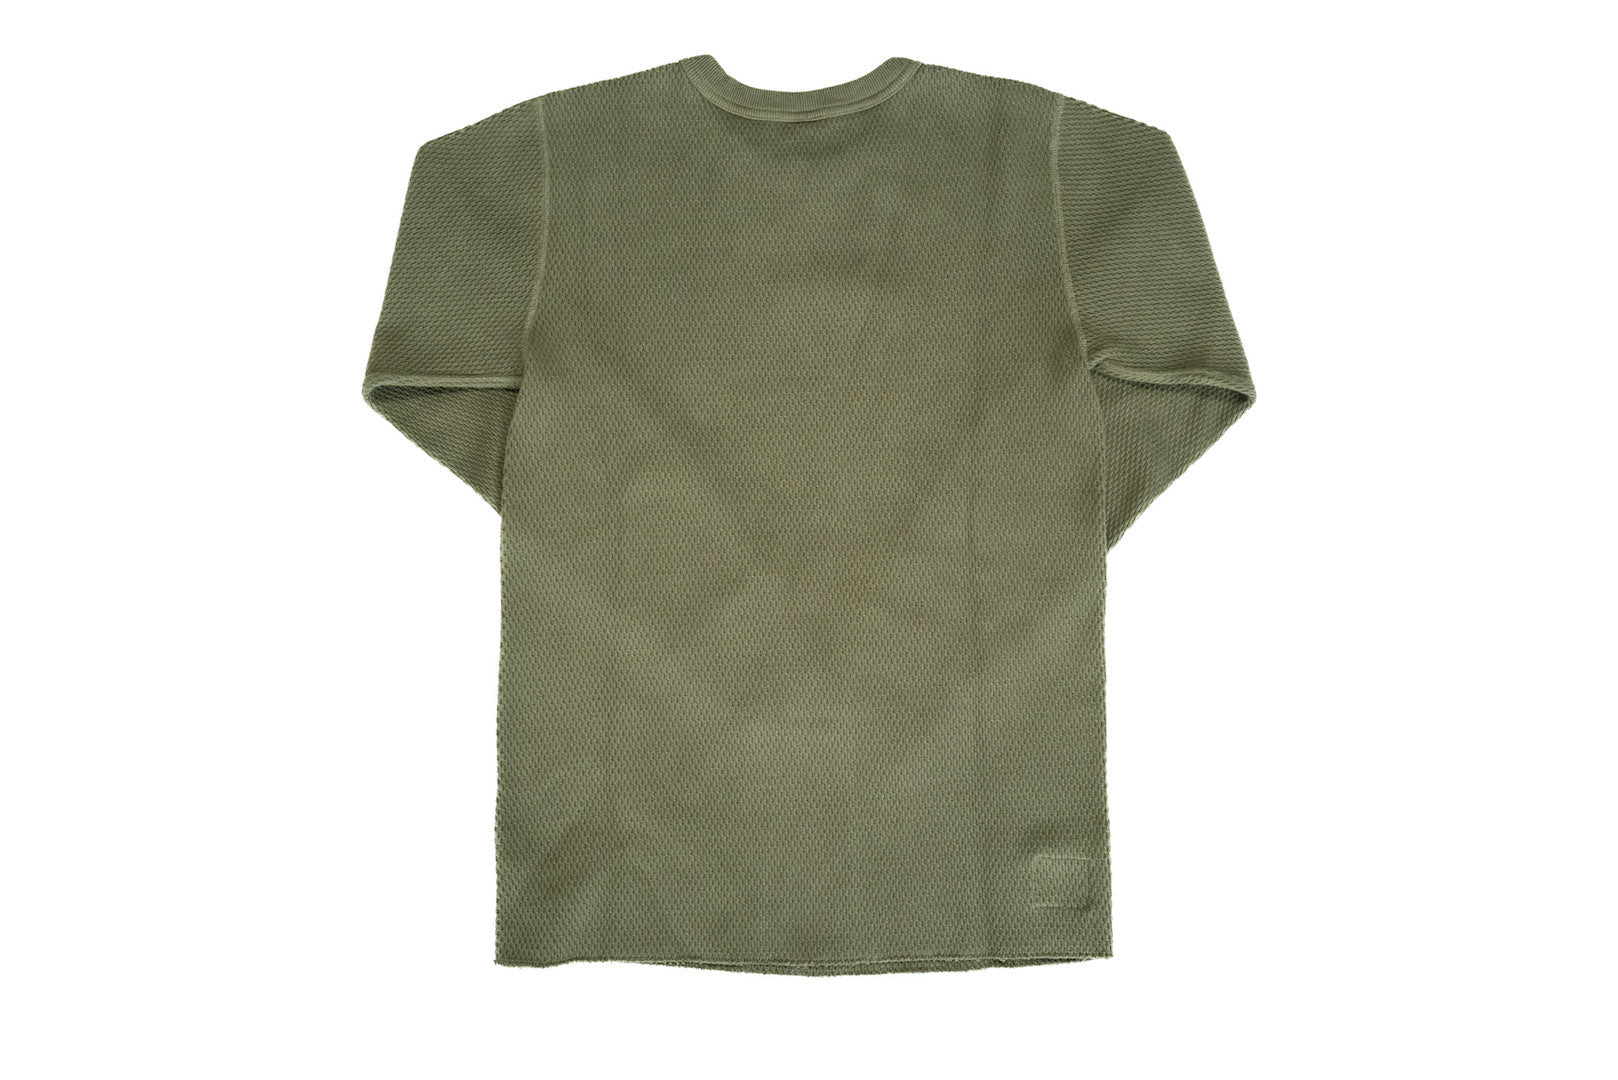 UES Ultra Heavyweight Thermal Sweatshirt (Olive)